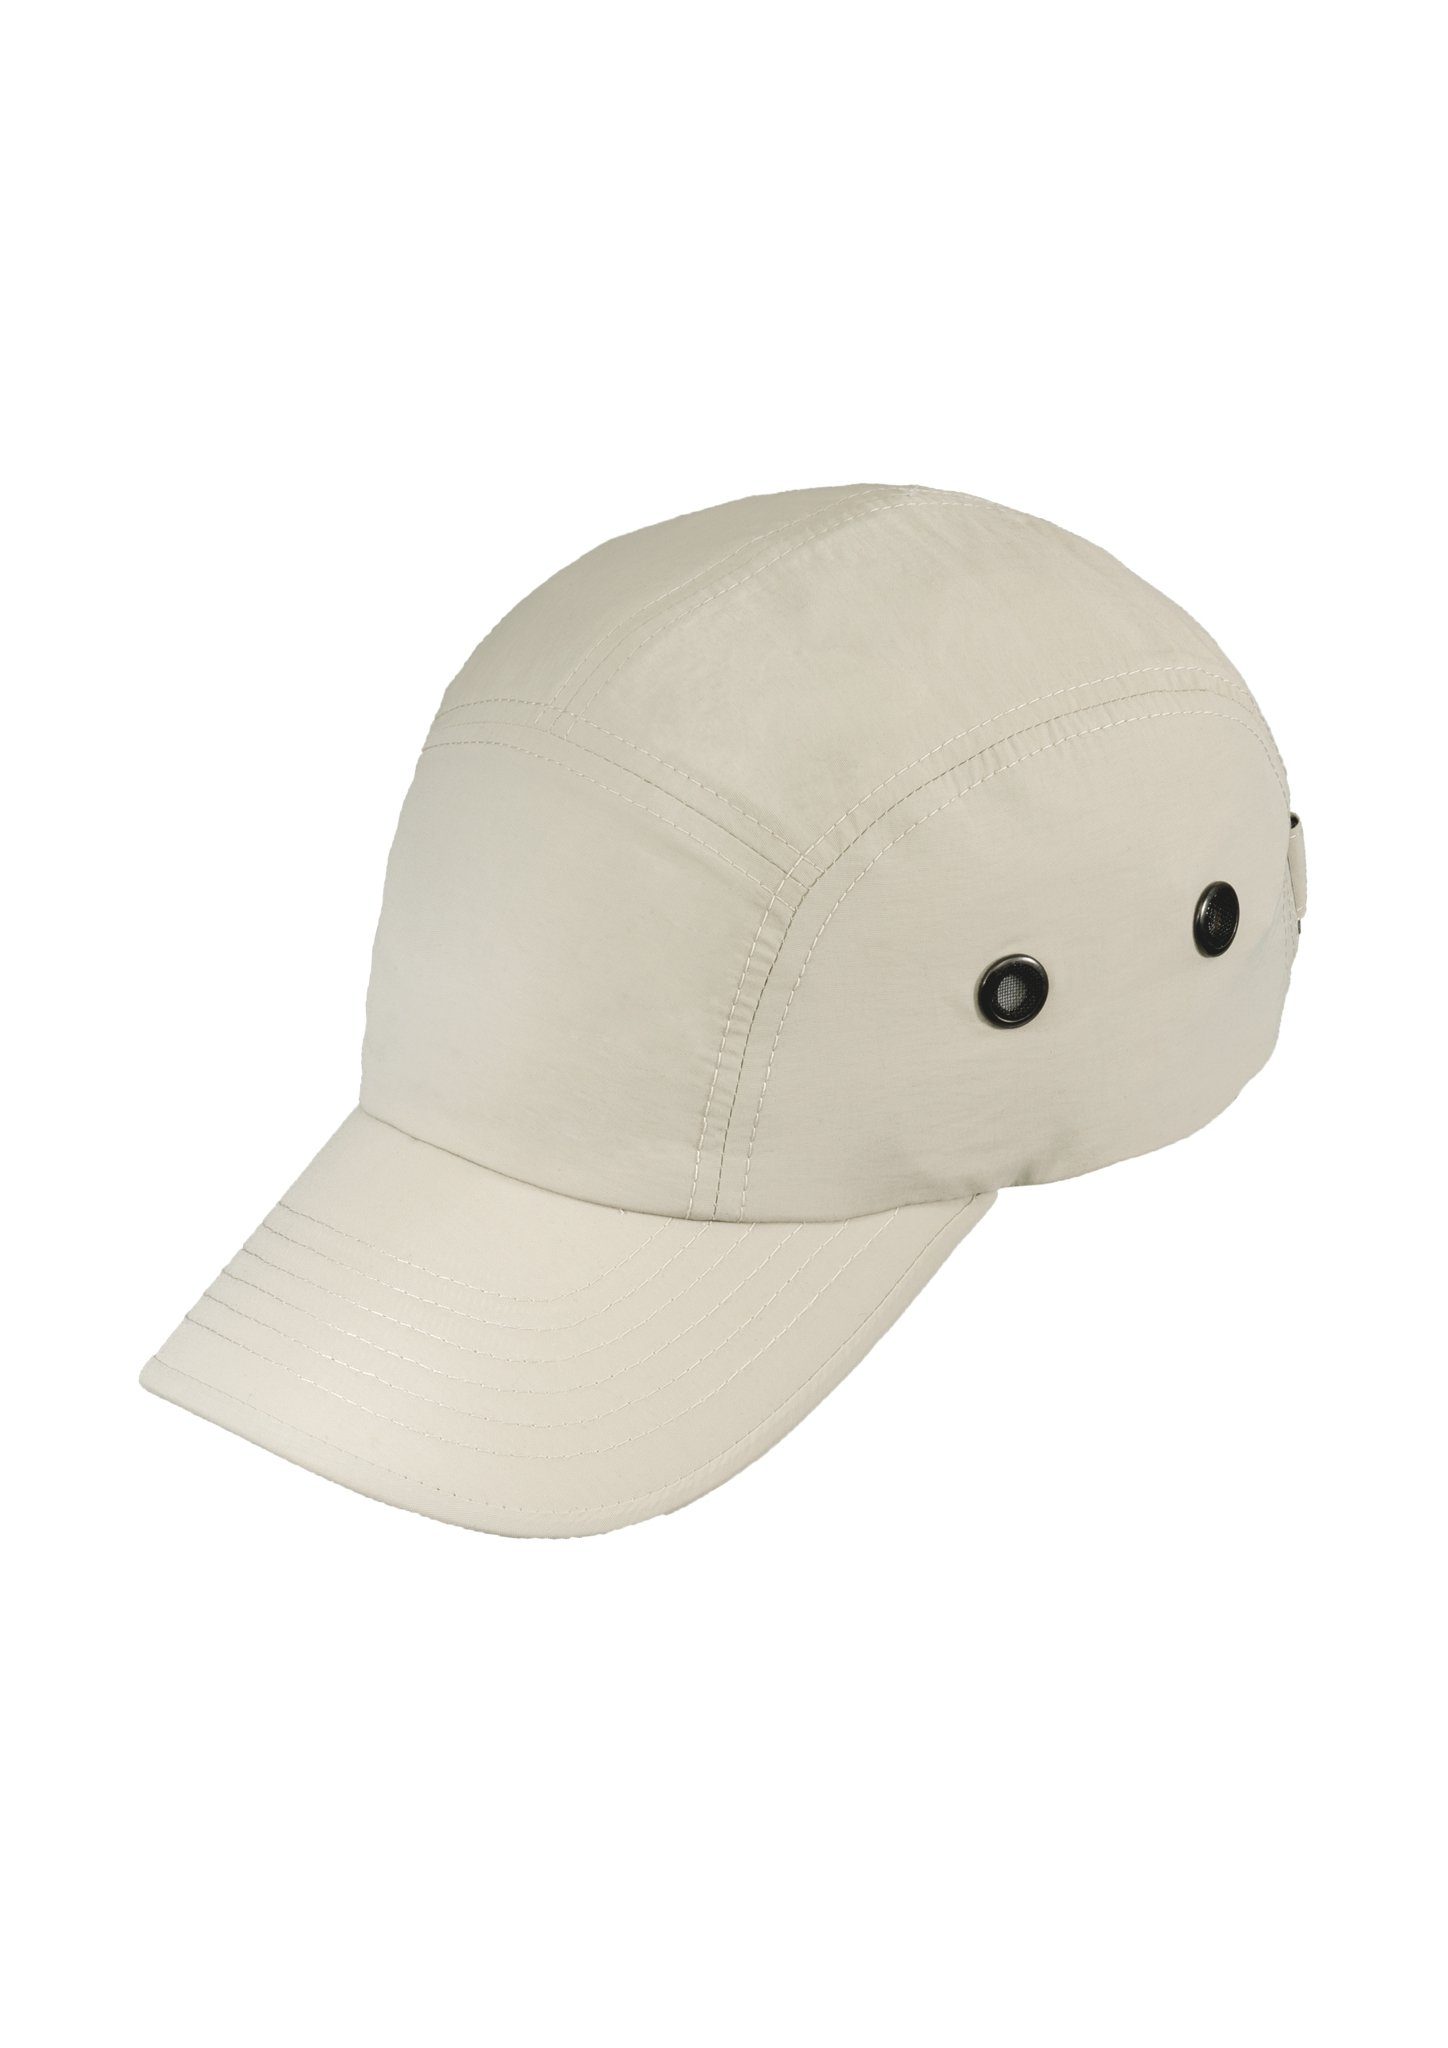 Chaplino Baseball Cap mit UV-Schutz 40+